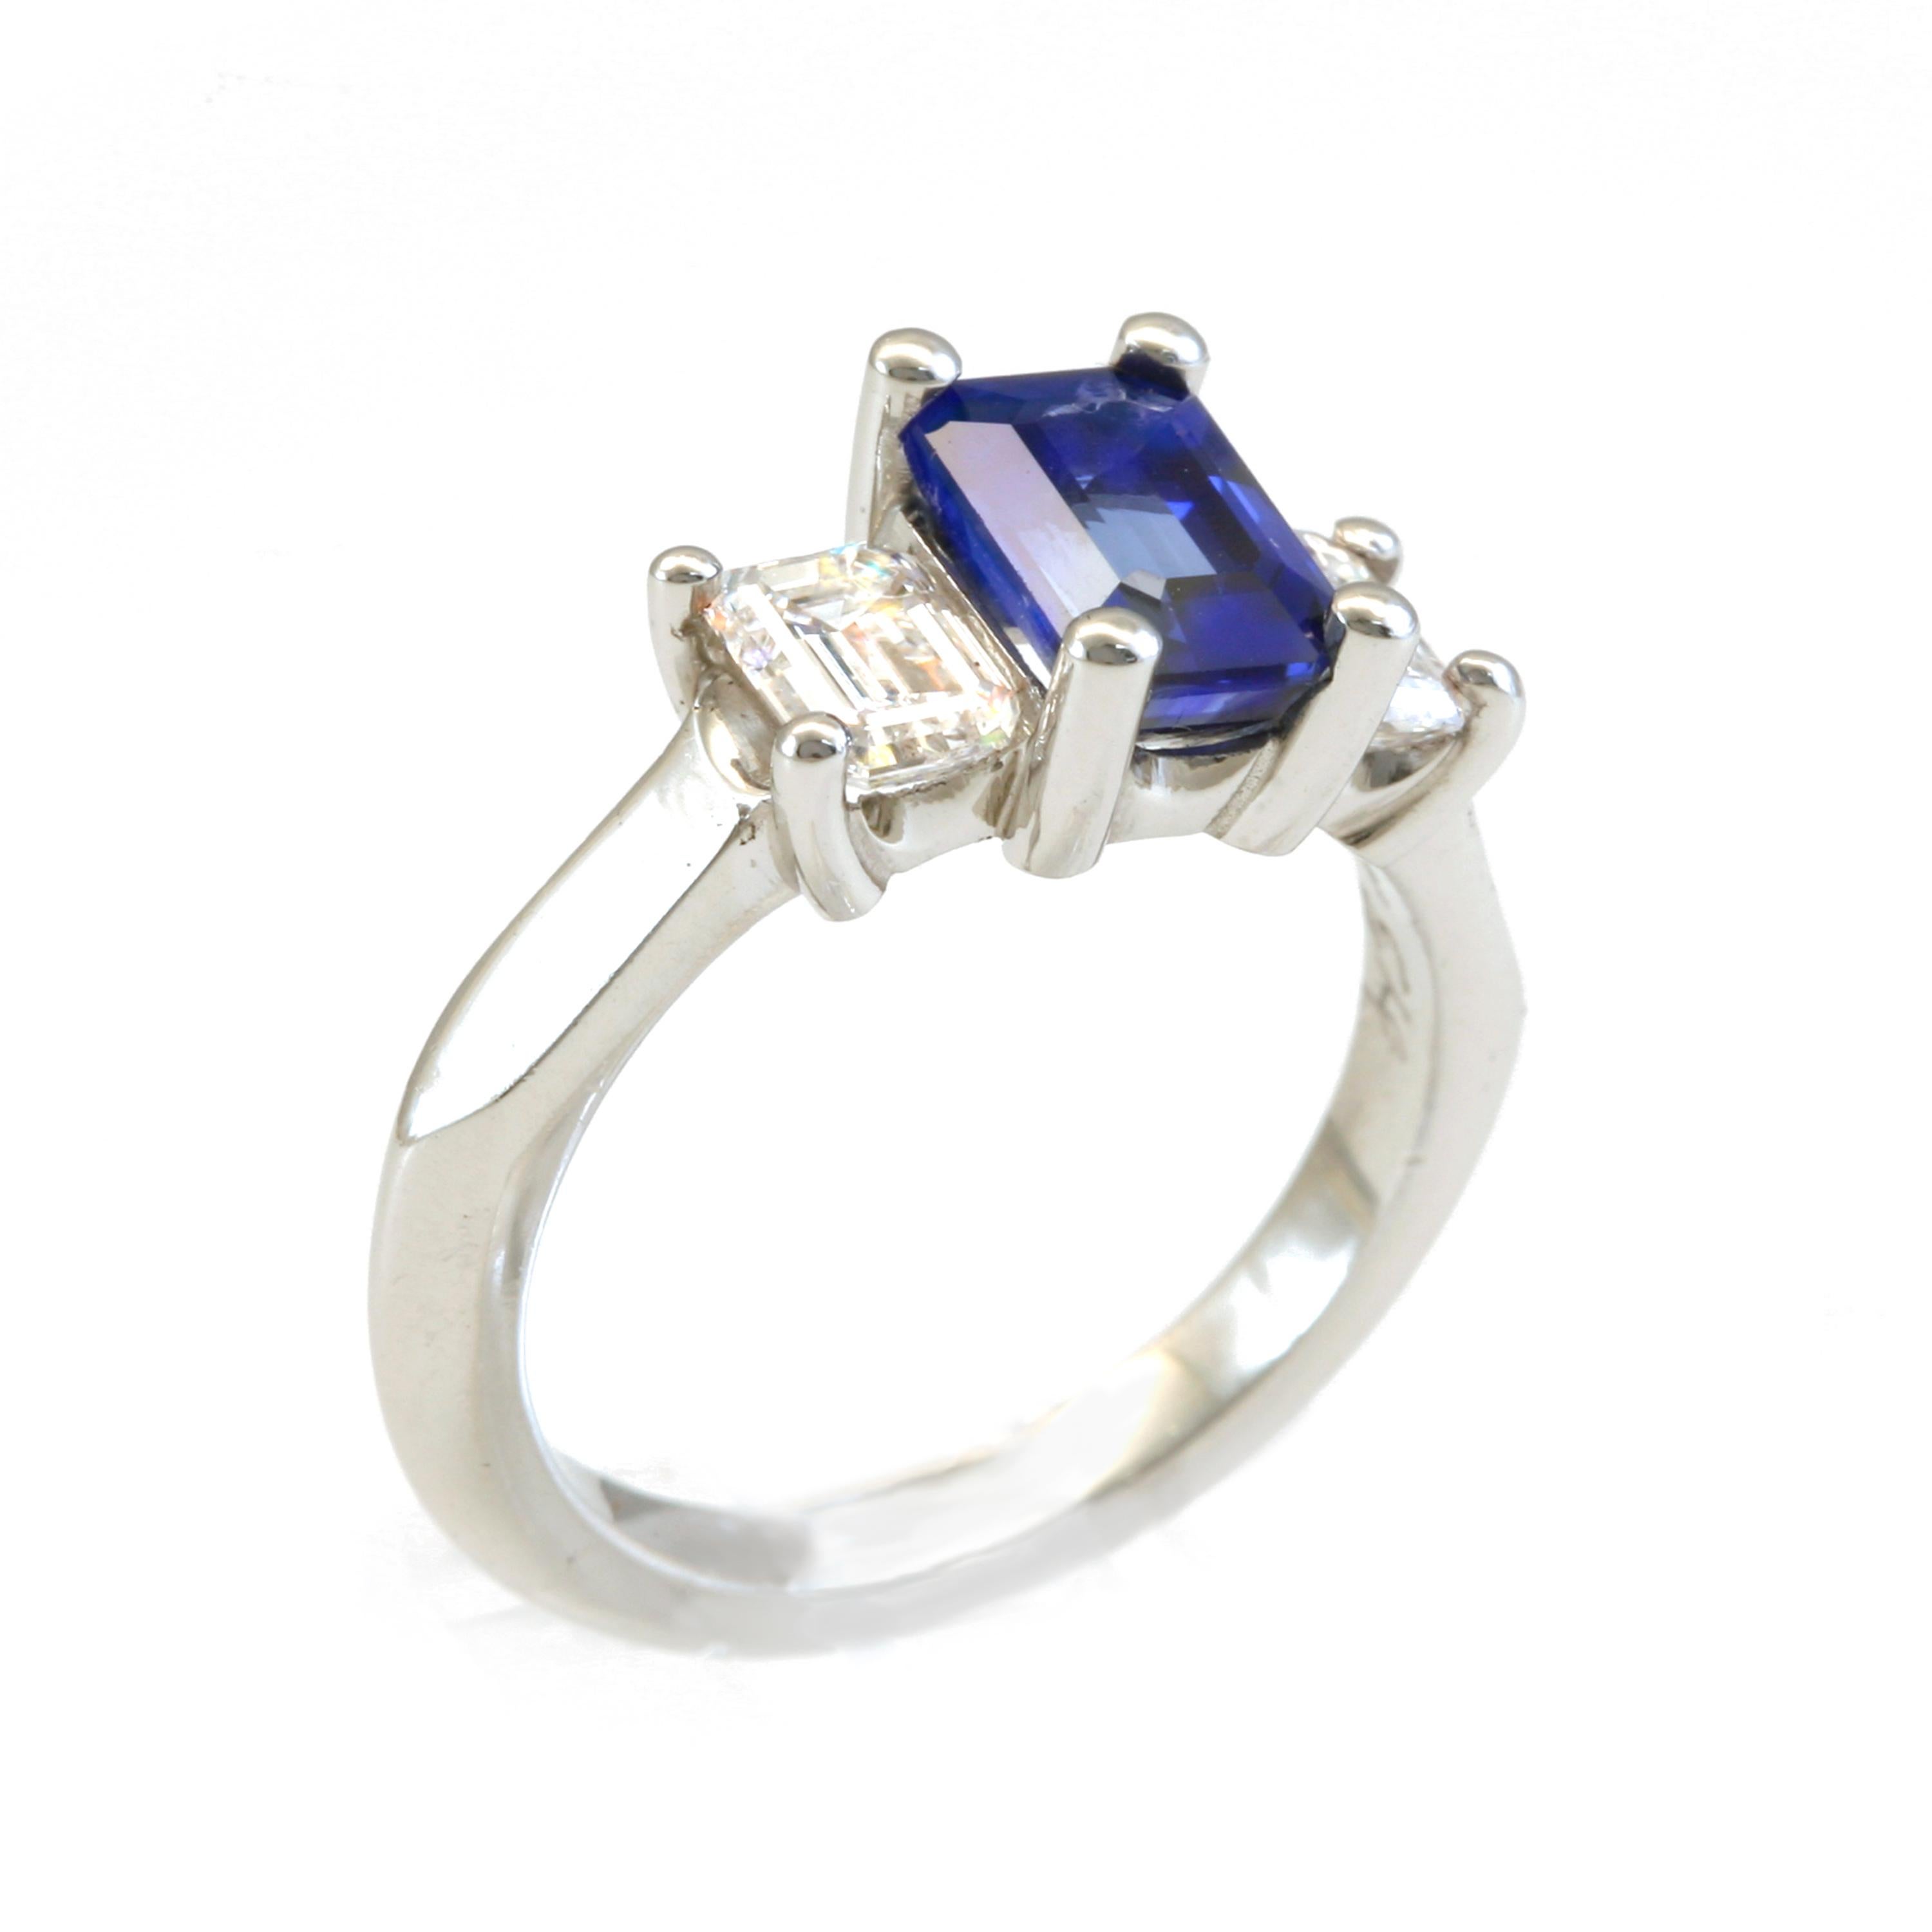 Diana Kim England Emerald Cut Ceylon Blue Sapphire and Diamond Ring in Platinum For Sale 1